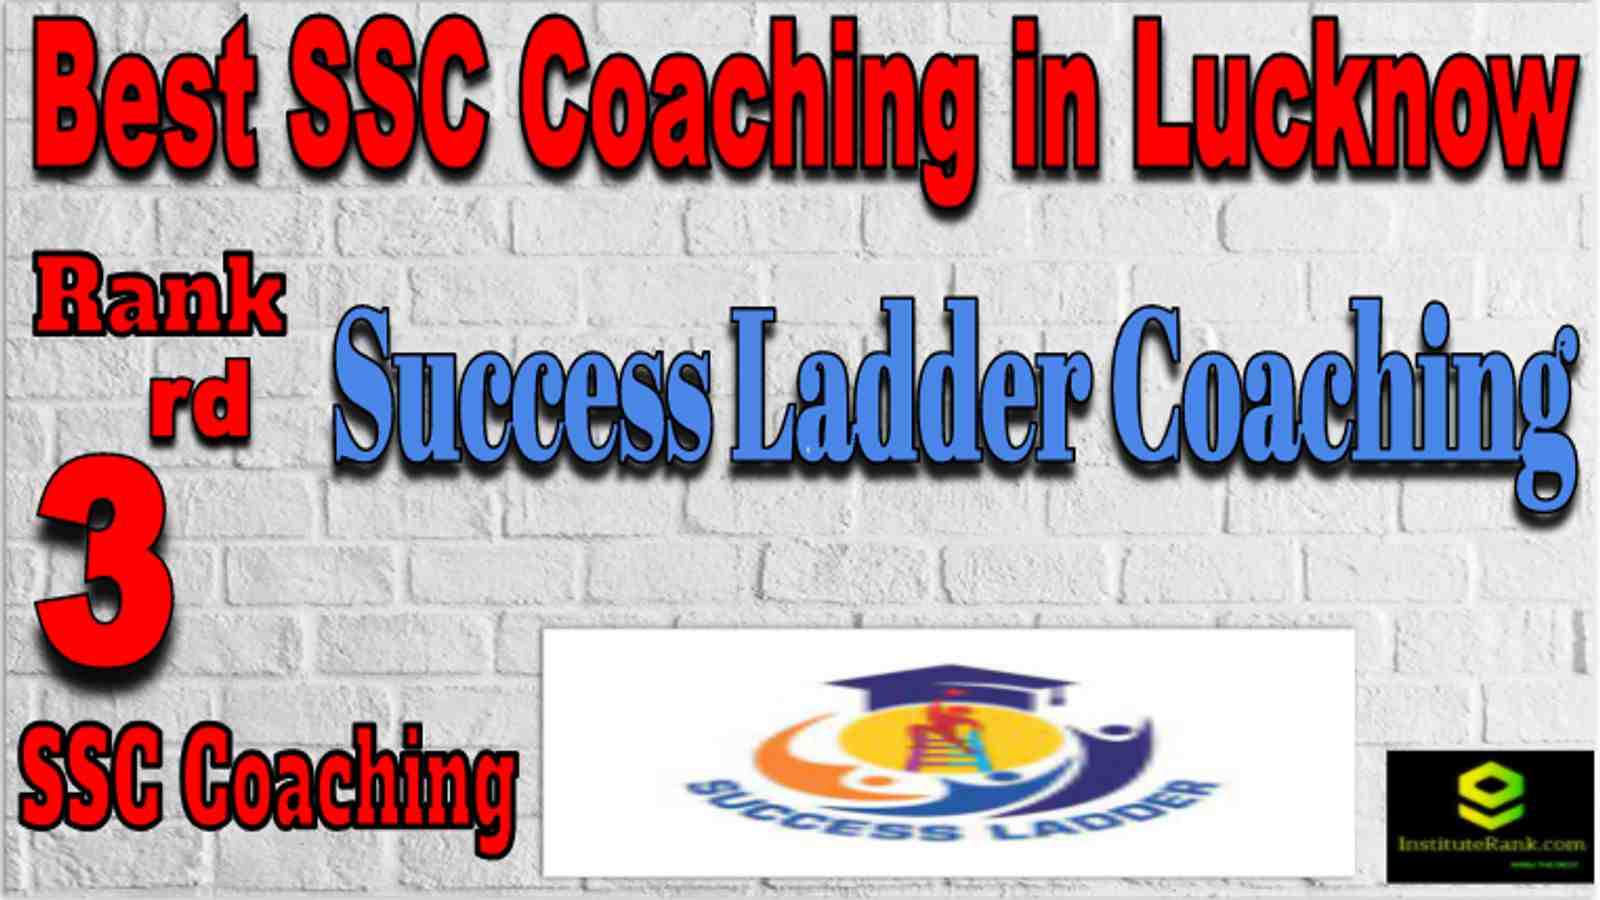 Rank 3 Best SSC Coaching in Lucknow